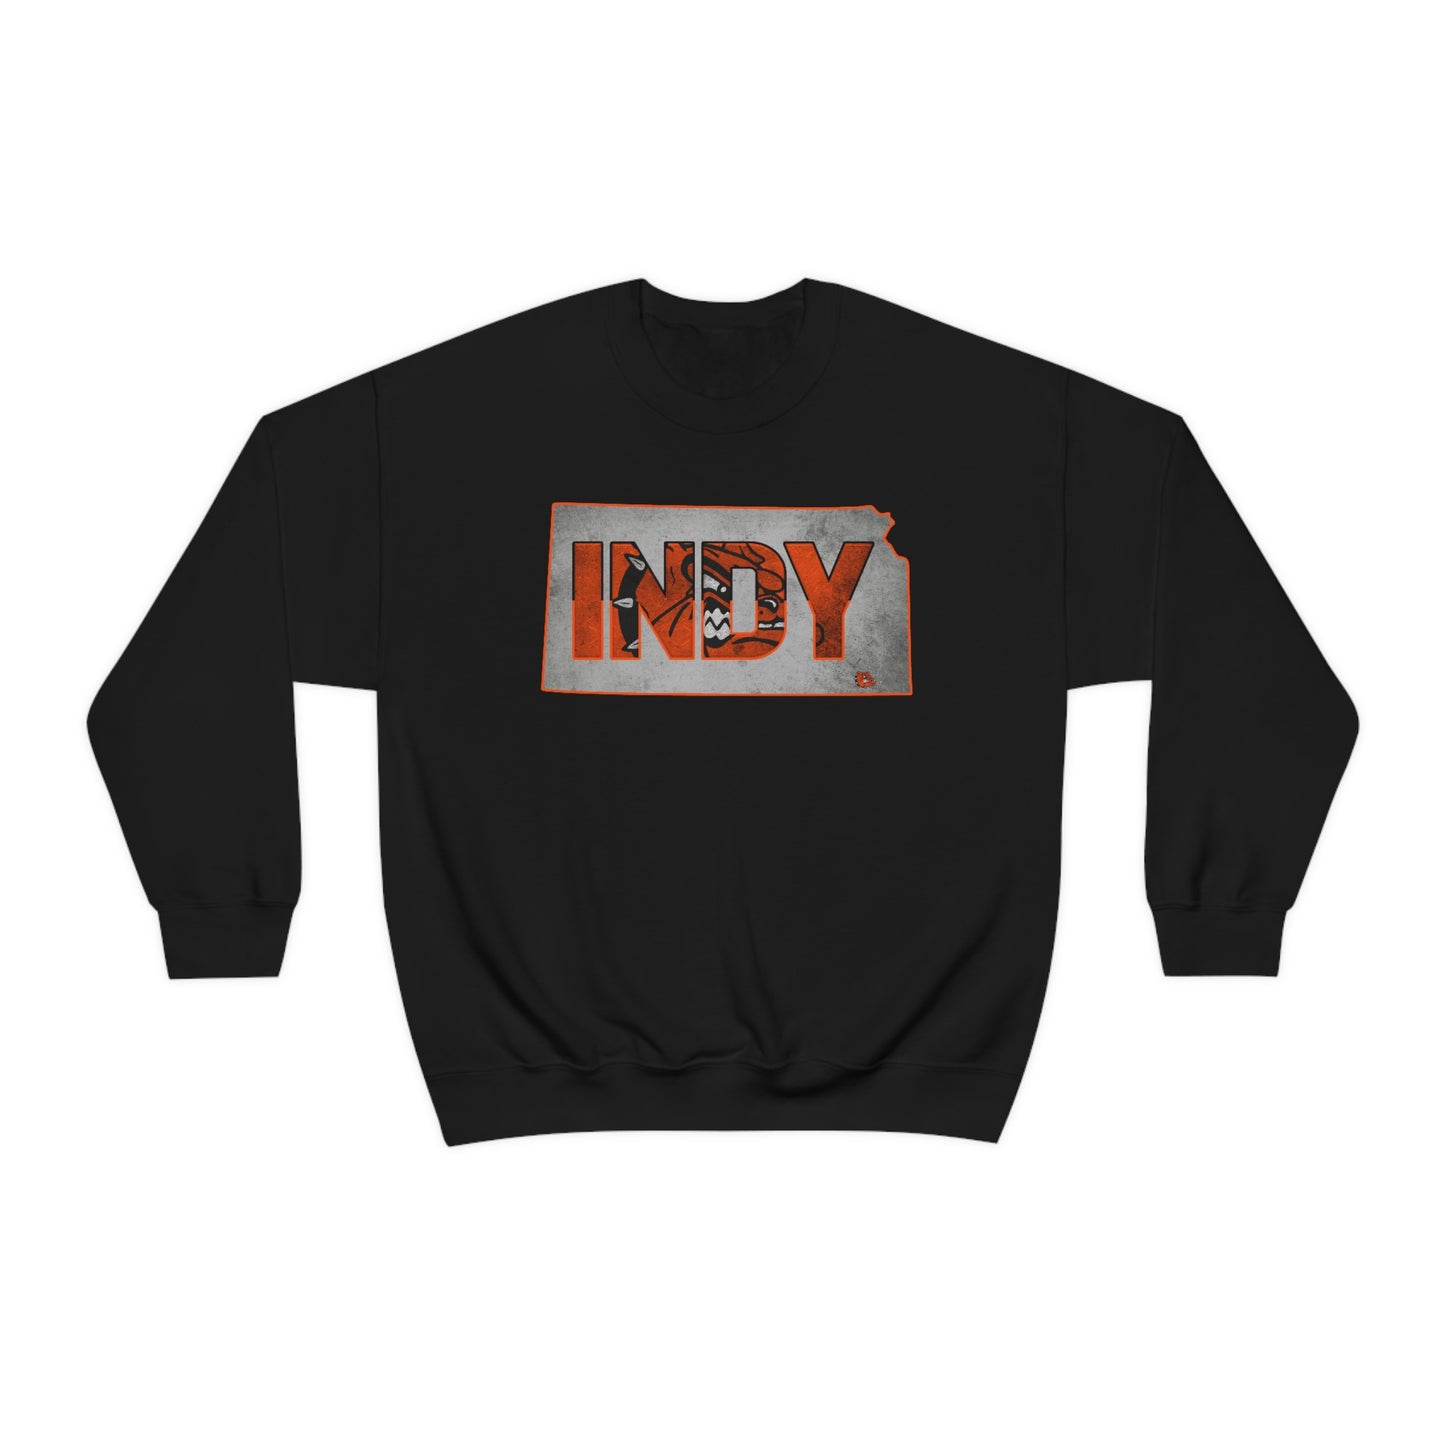 Indy KS - Crewneck Sweatshirt